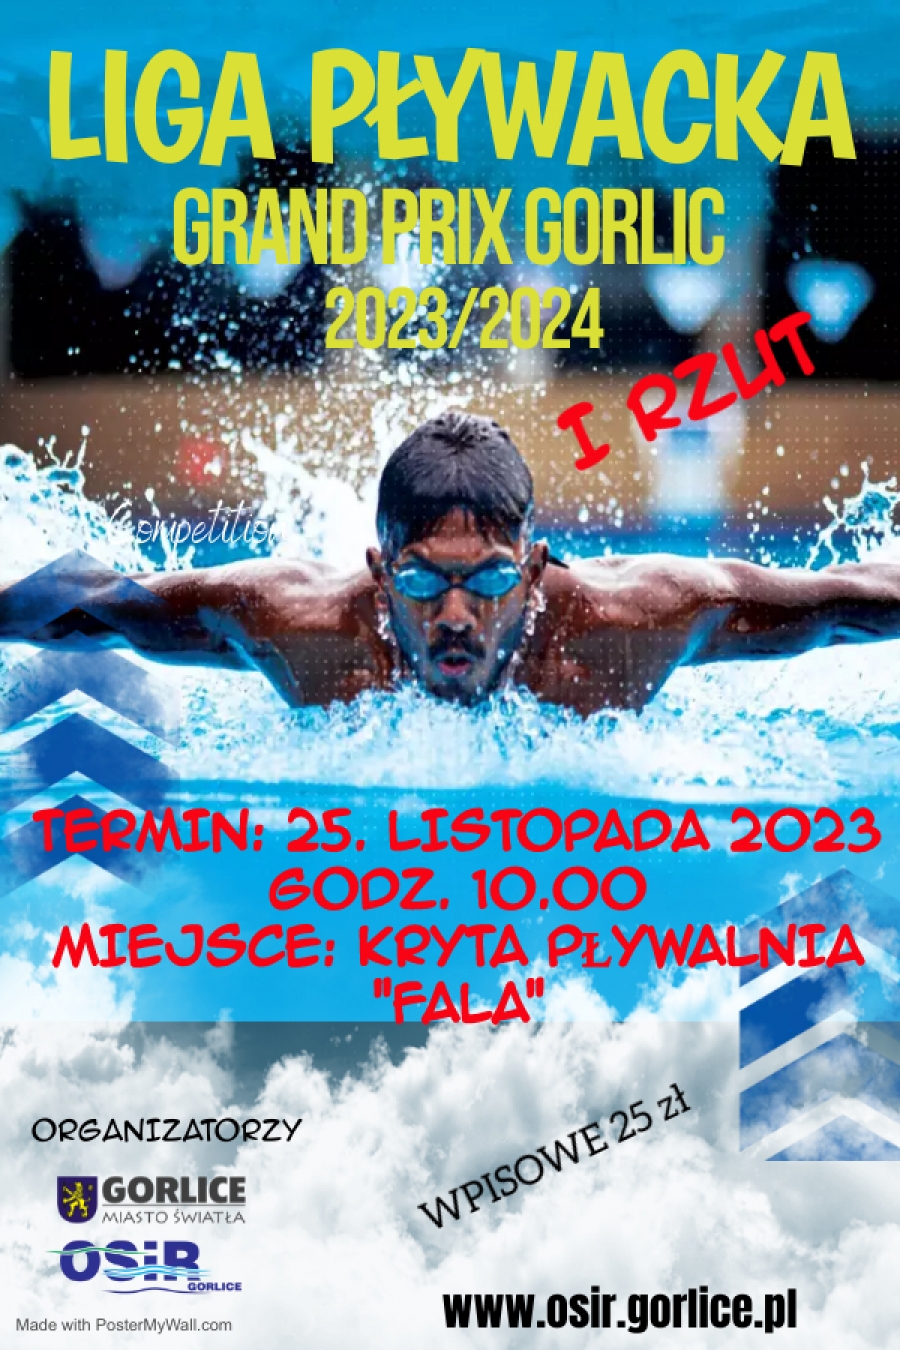 Liga Pływacka Grand Prix Gorlic